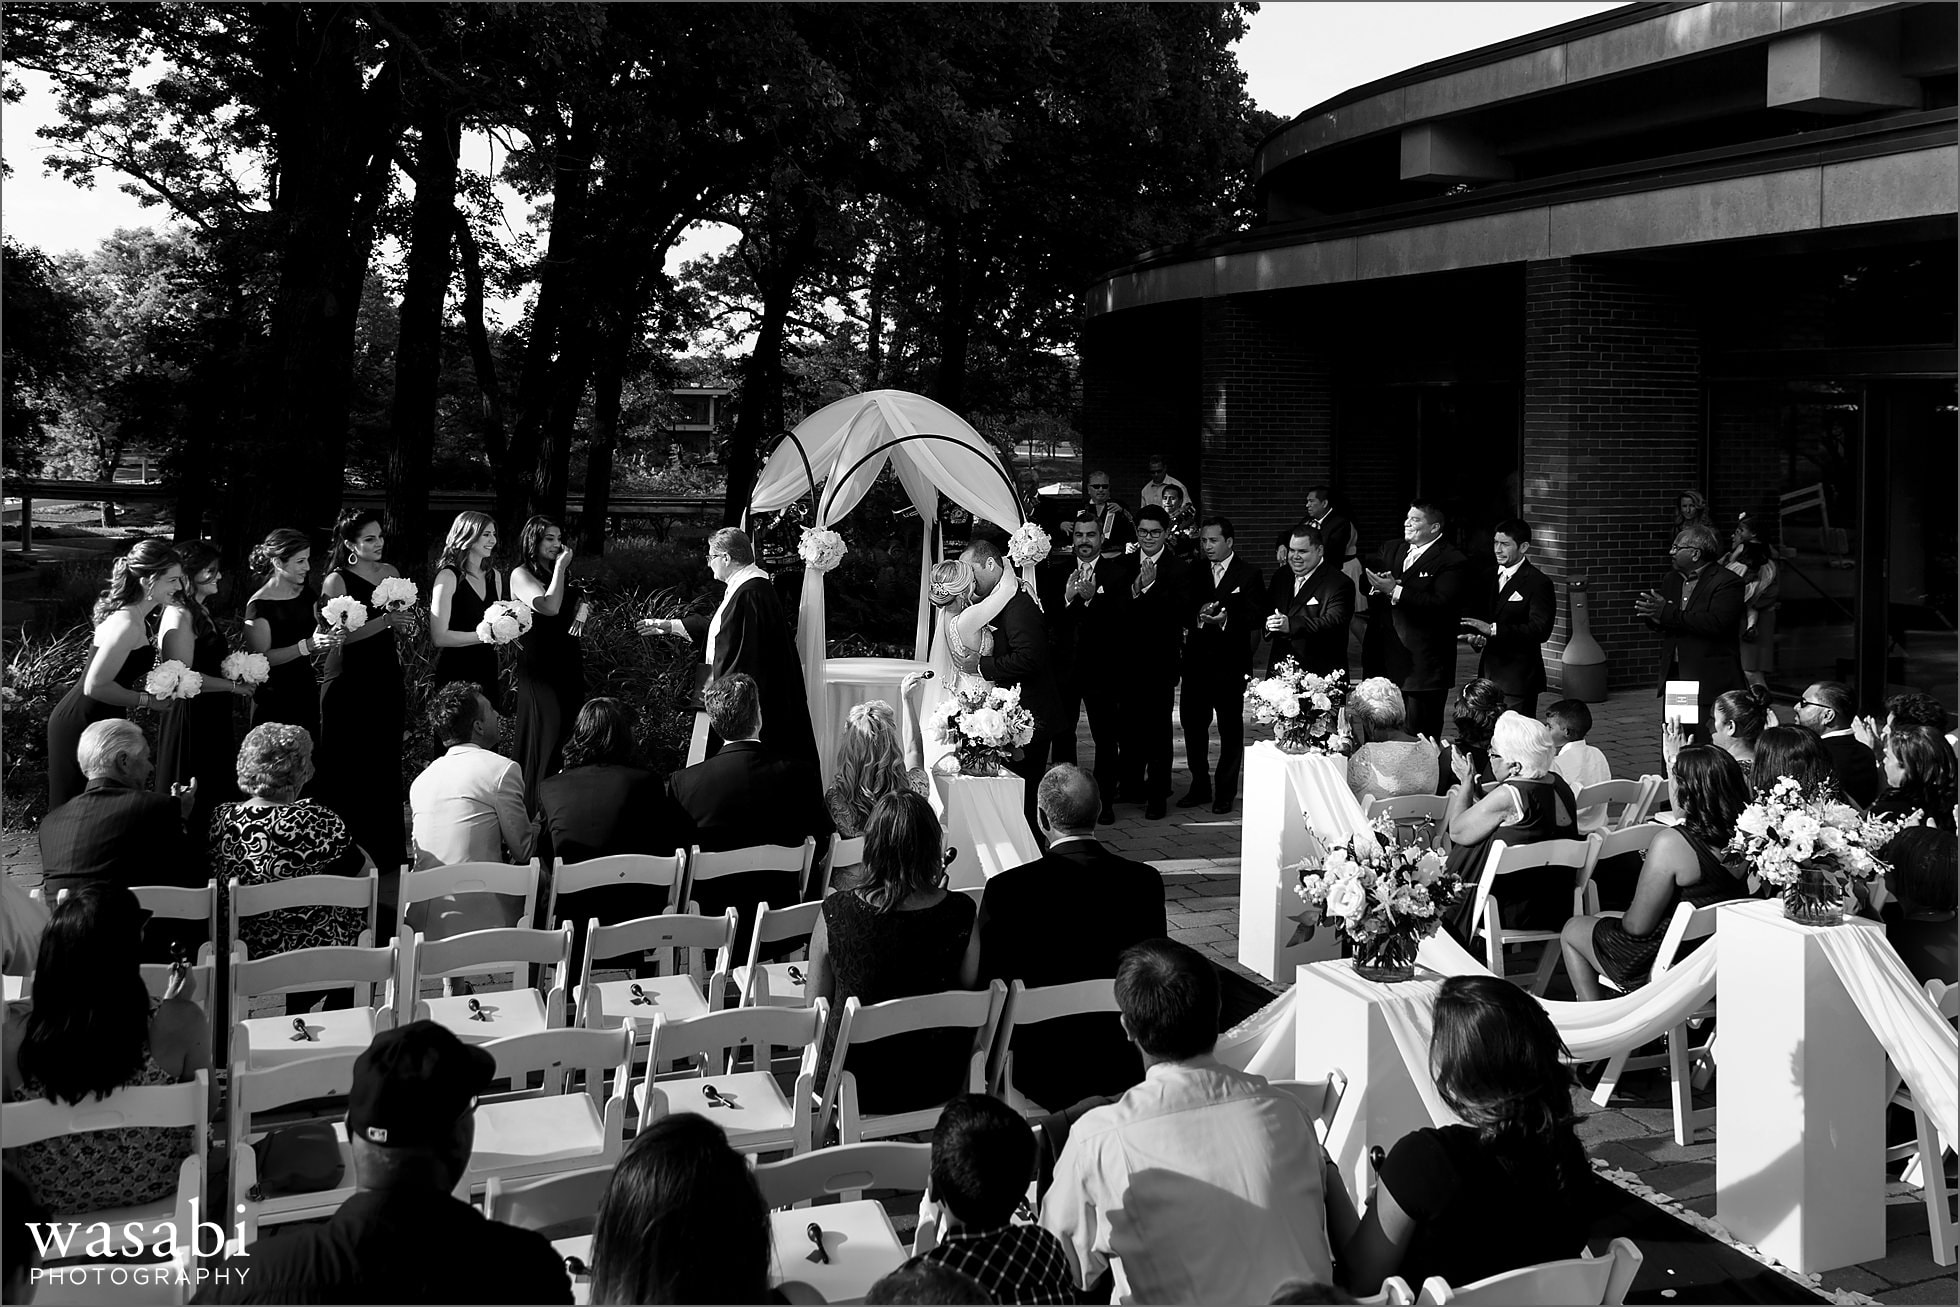 hyatt lodge outdoor ceremony photos